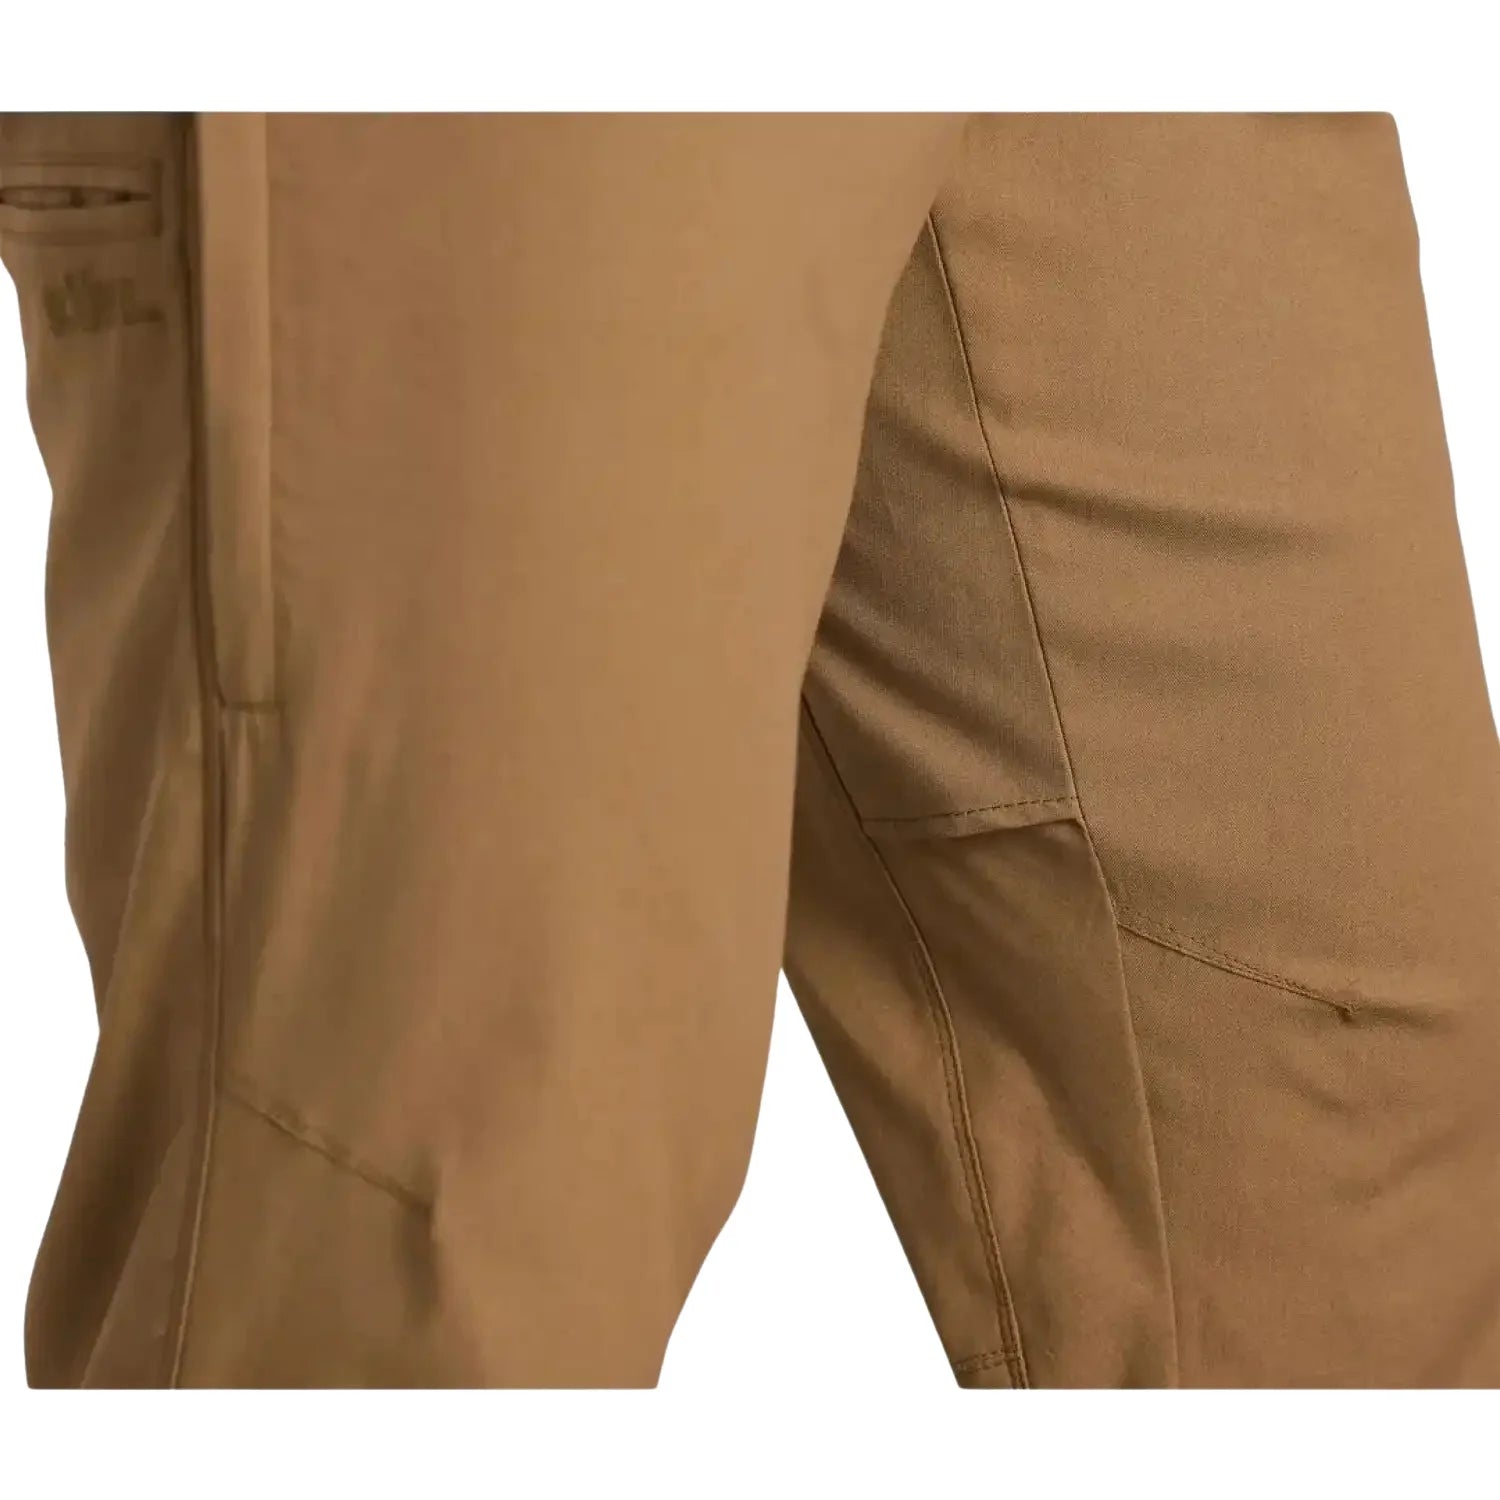 KÜHL Men's RESISTOR™ AIR Pants shown in the Dark Khaki color option. Knee view.